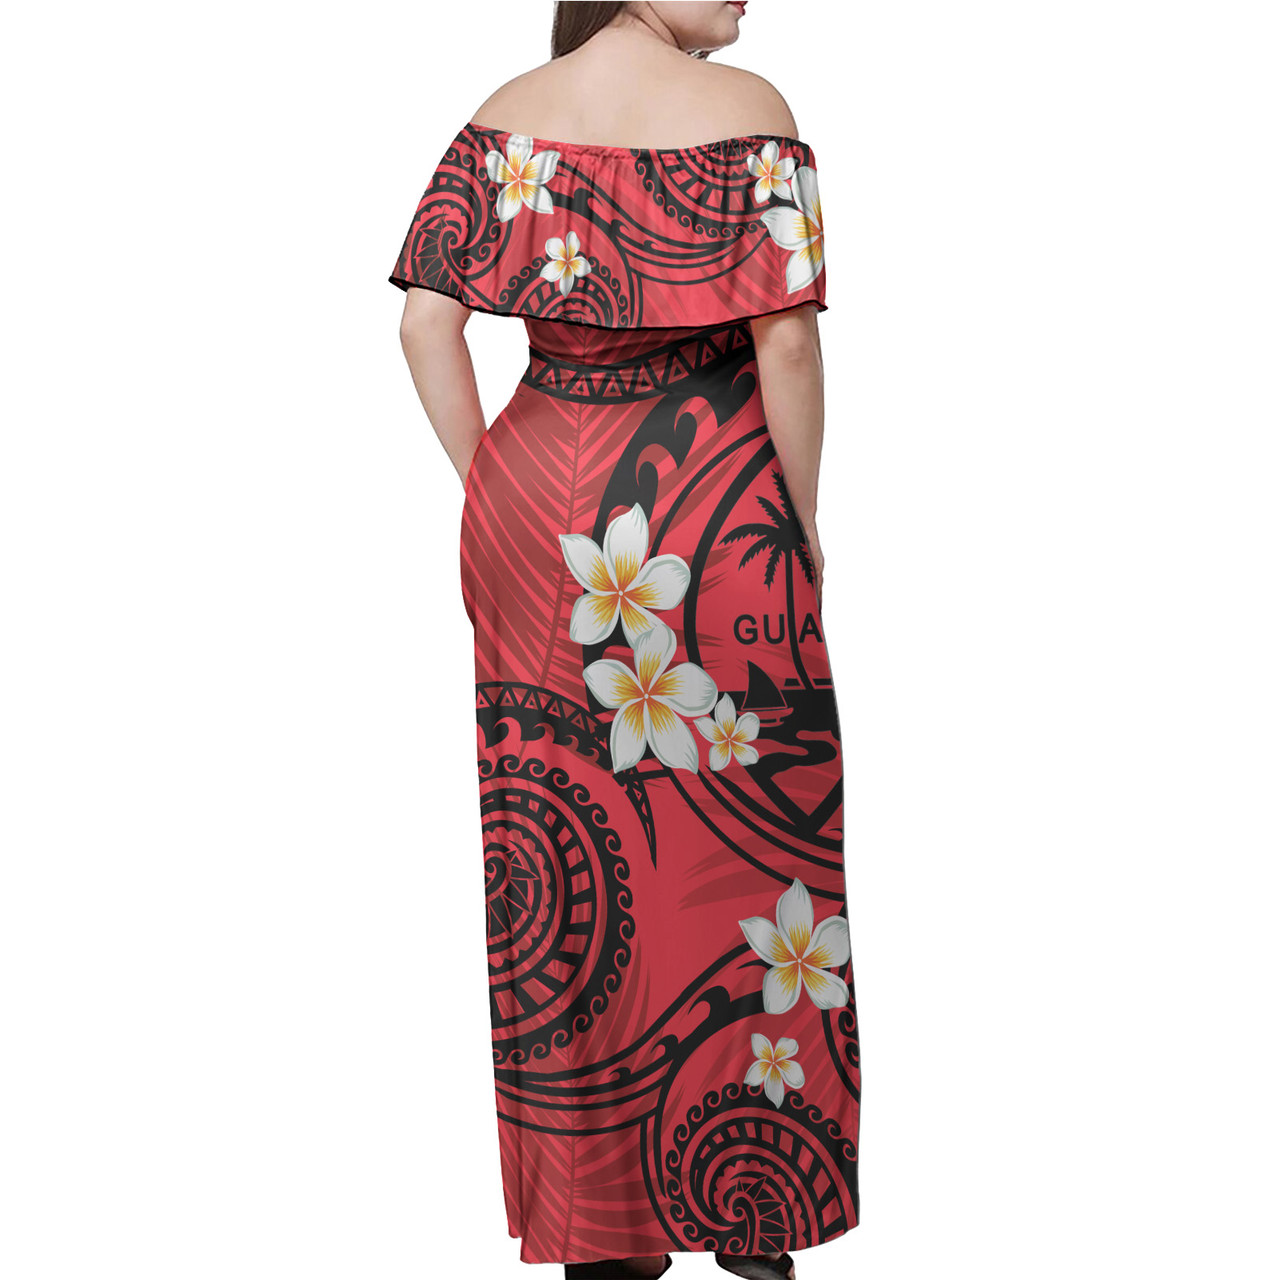 Guam Off Shoulder Long Dress Plumeria Flowers Tribal Motif Red Version